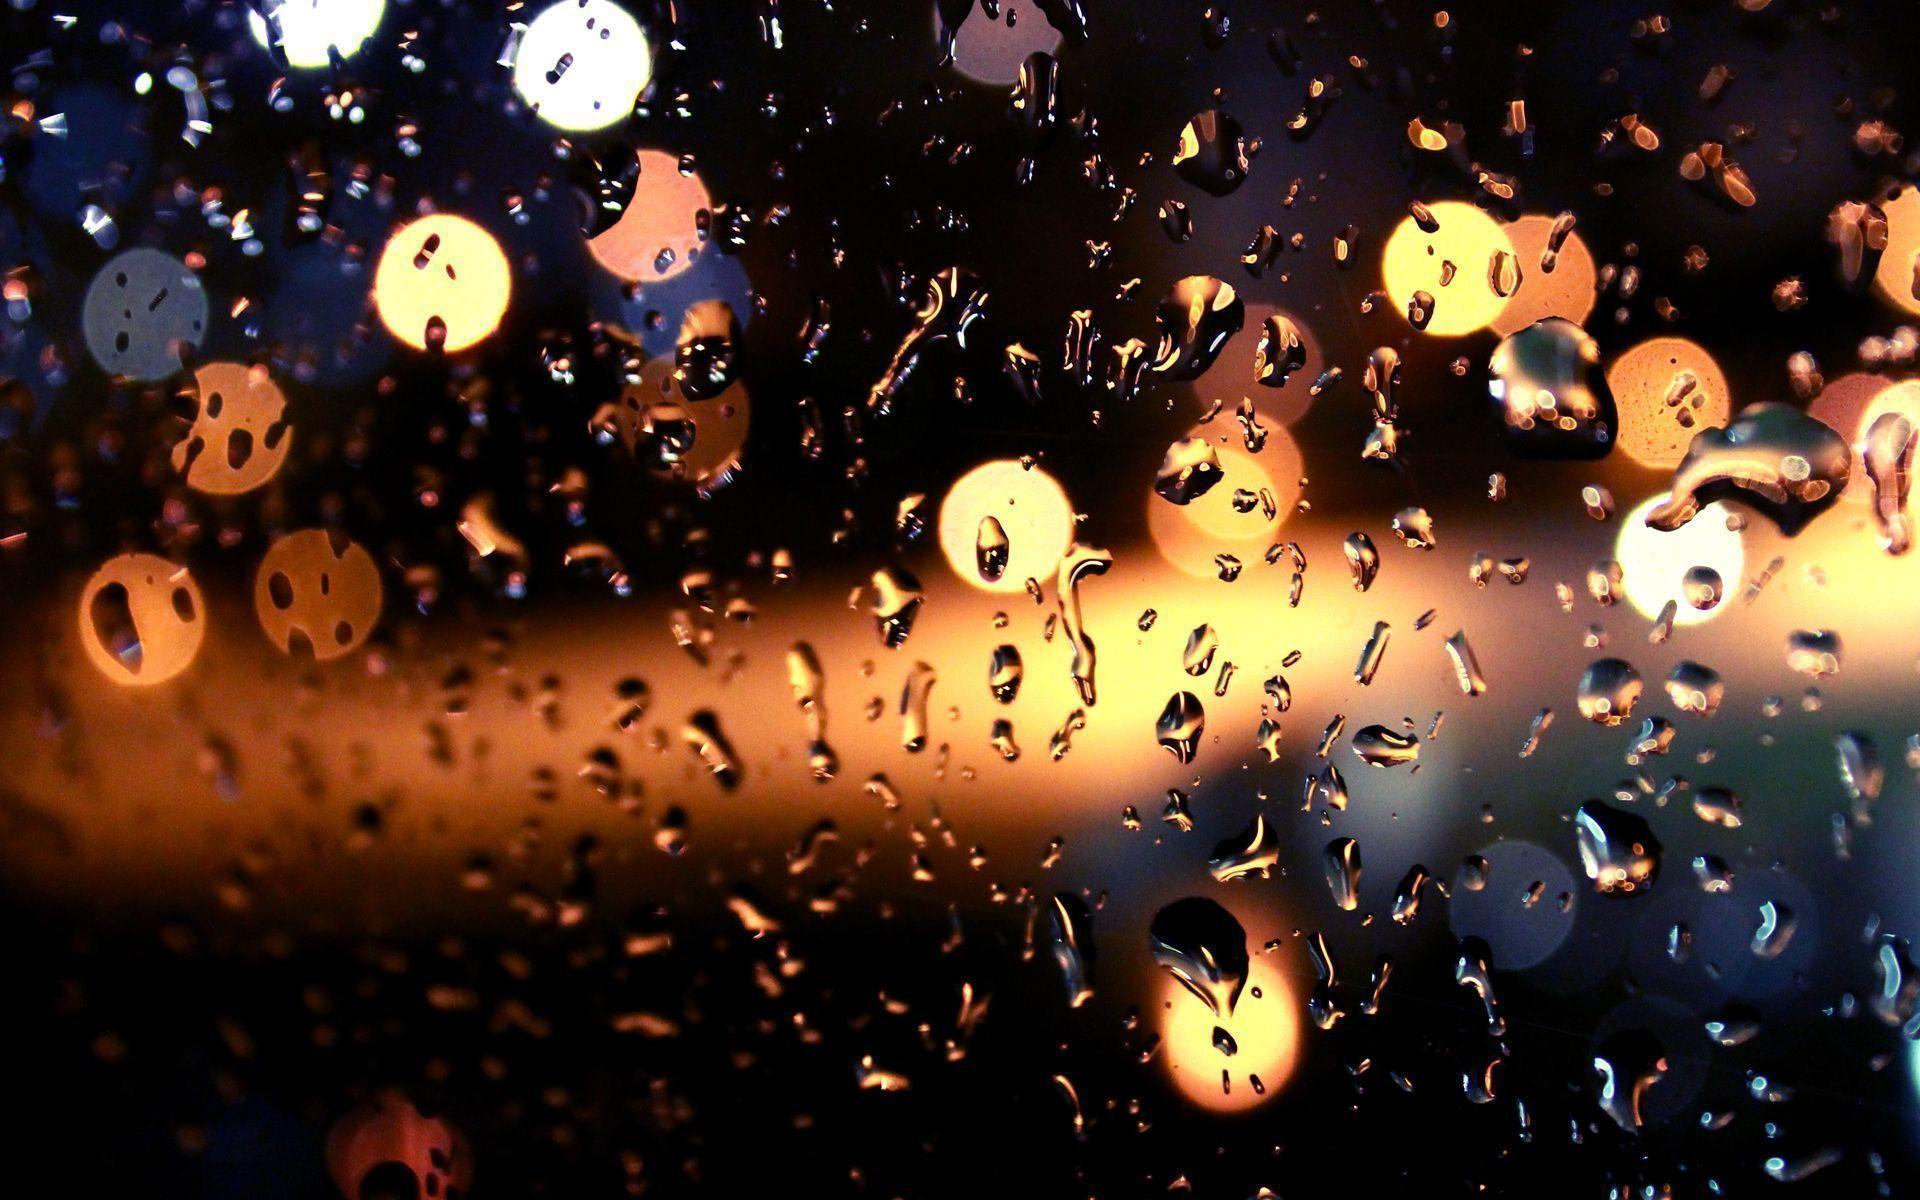 Rain drops on the window Wallpaper